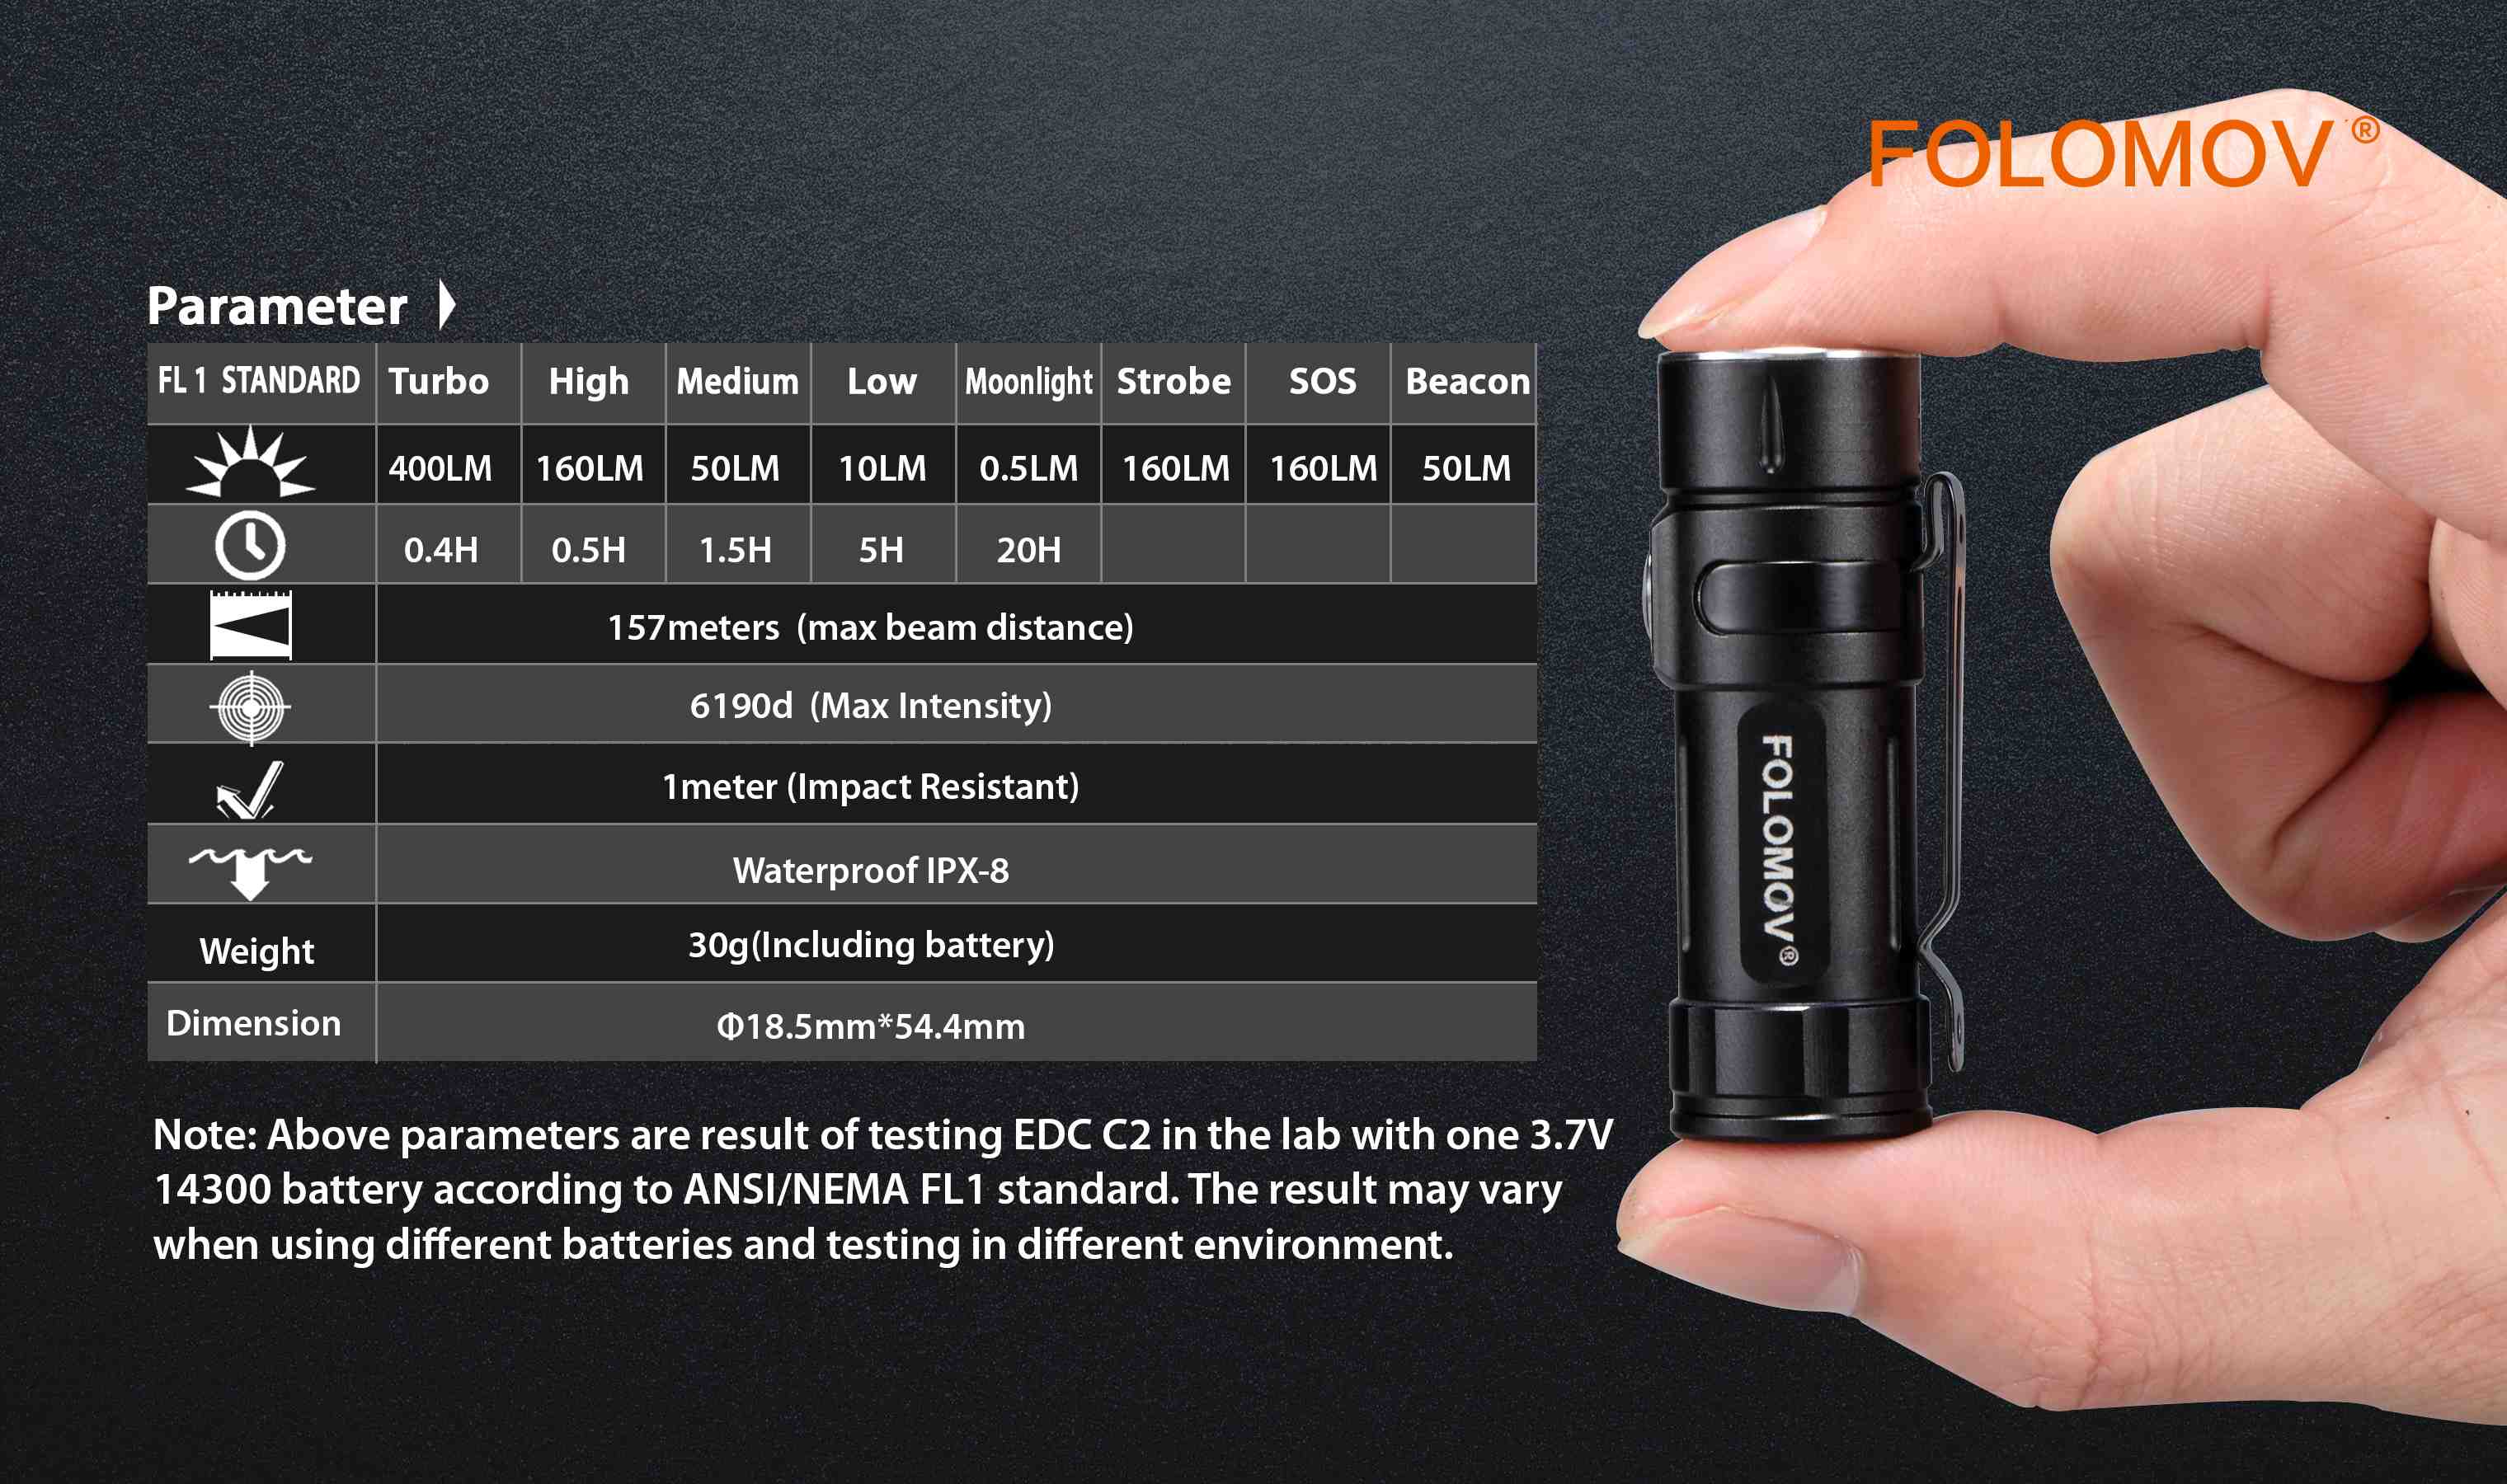 FOLOMOV EDC C2 Nichia E21A High CRI98 Compact EDC LED Flashlight With 14300 Battery Ulralight Pocket Clip Light Mini LED Torch EDC Survival Tools